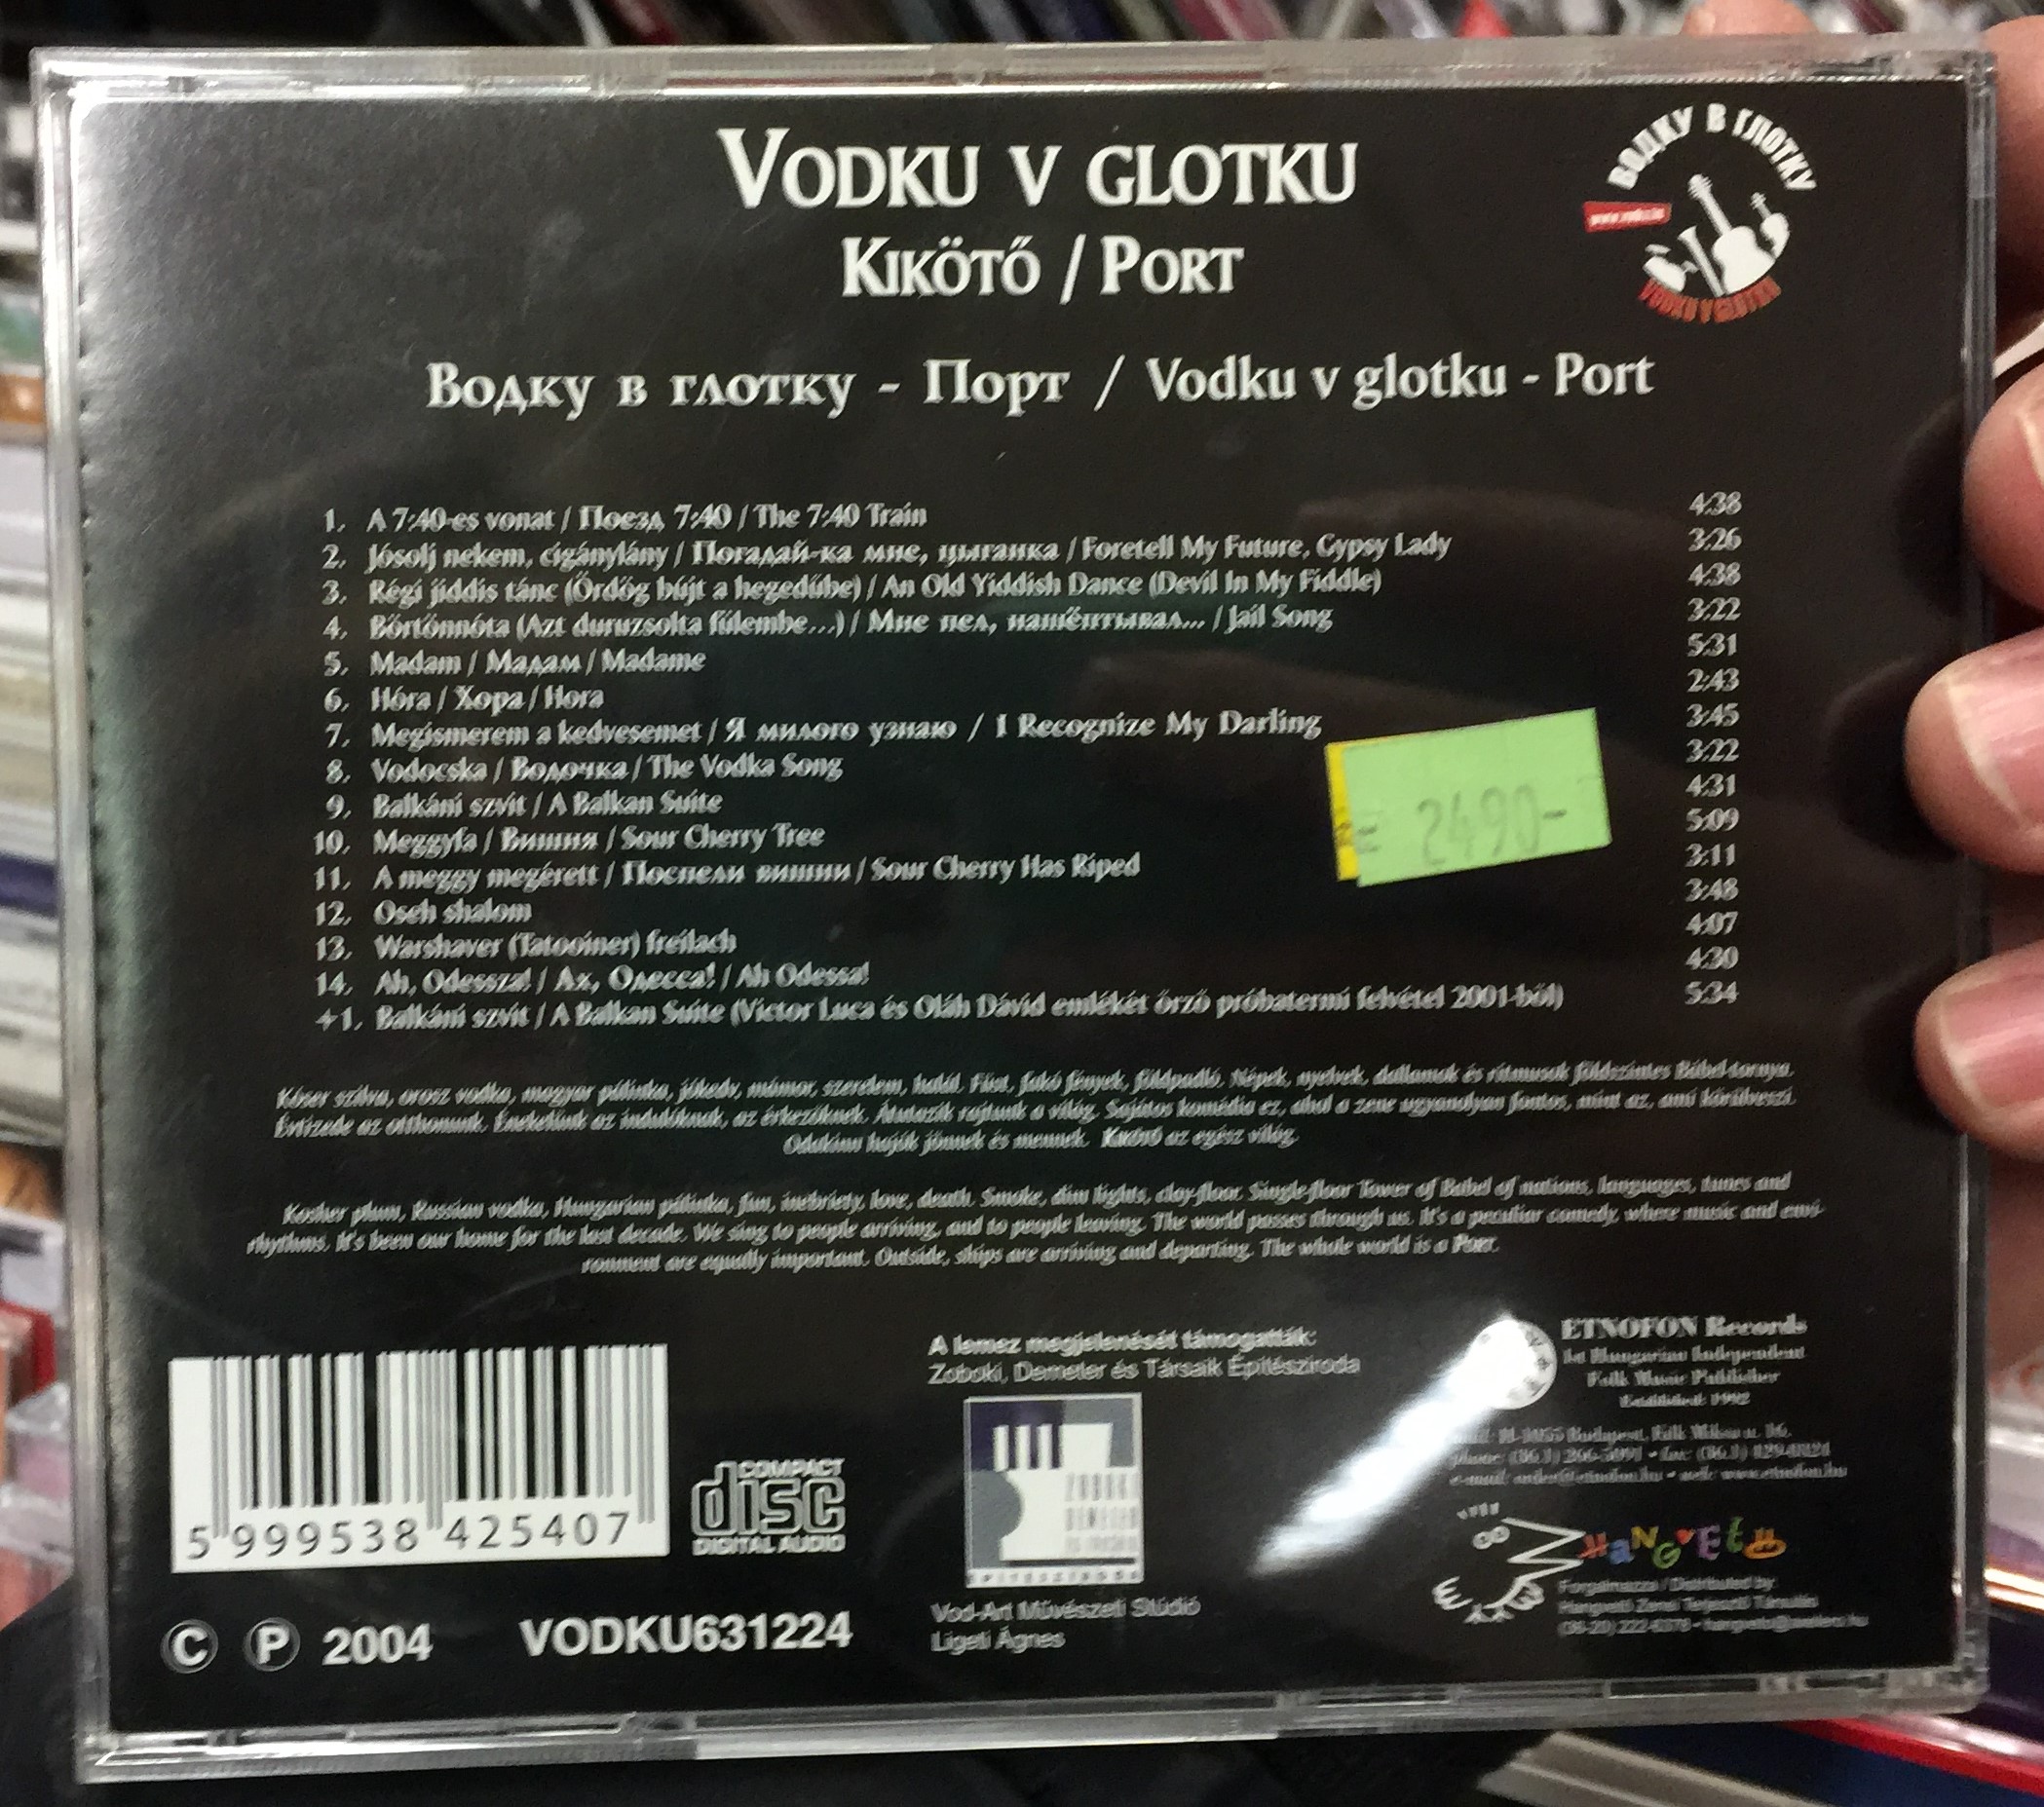 vodku-v-glotku-kik-t-etnofon-audio-cd-2004-vodku631224-2-.jpg